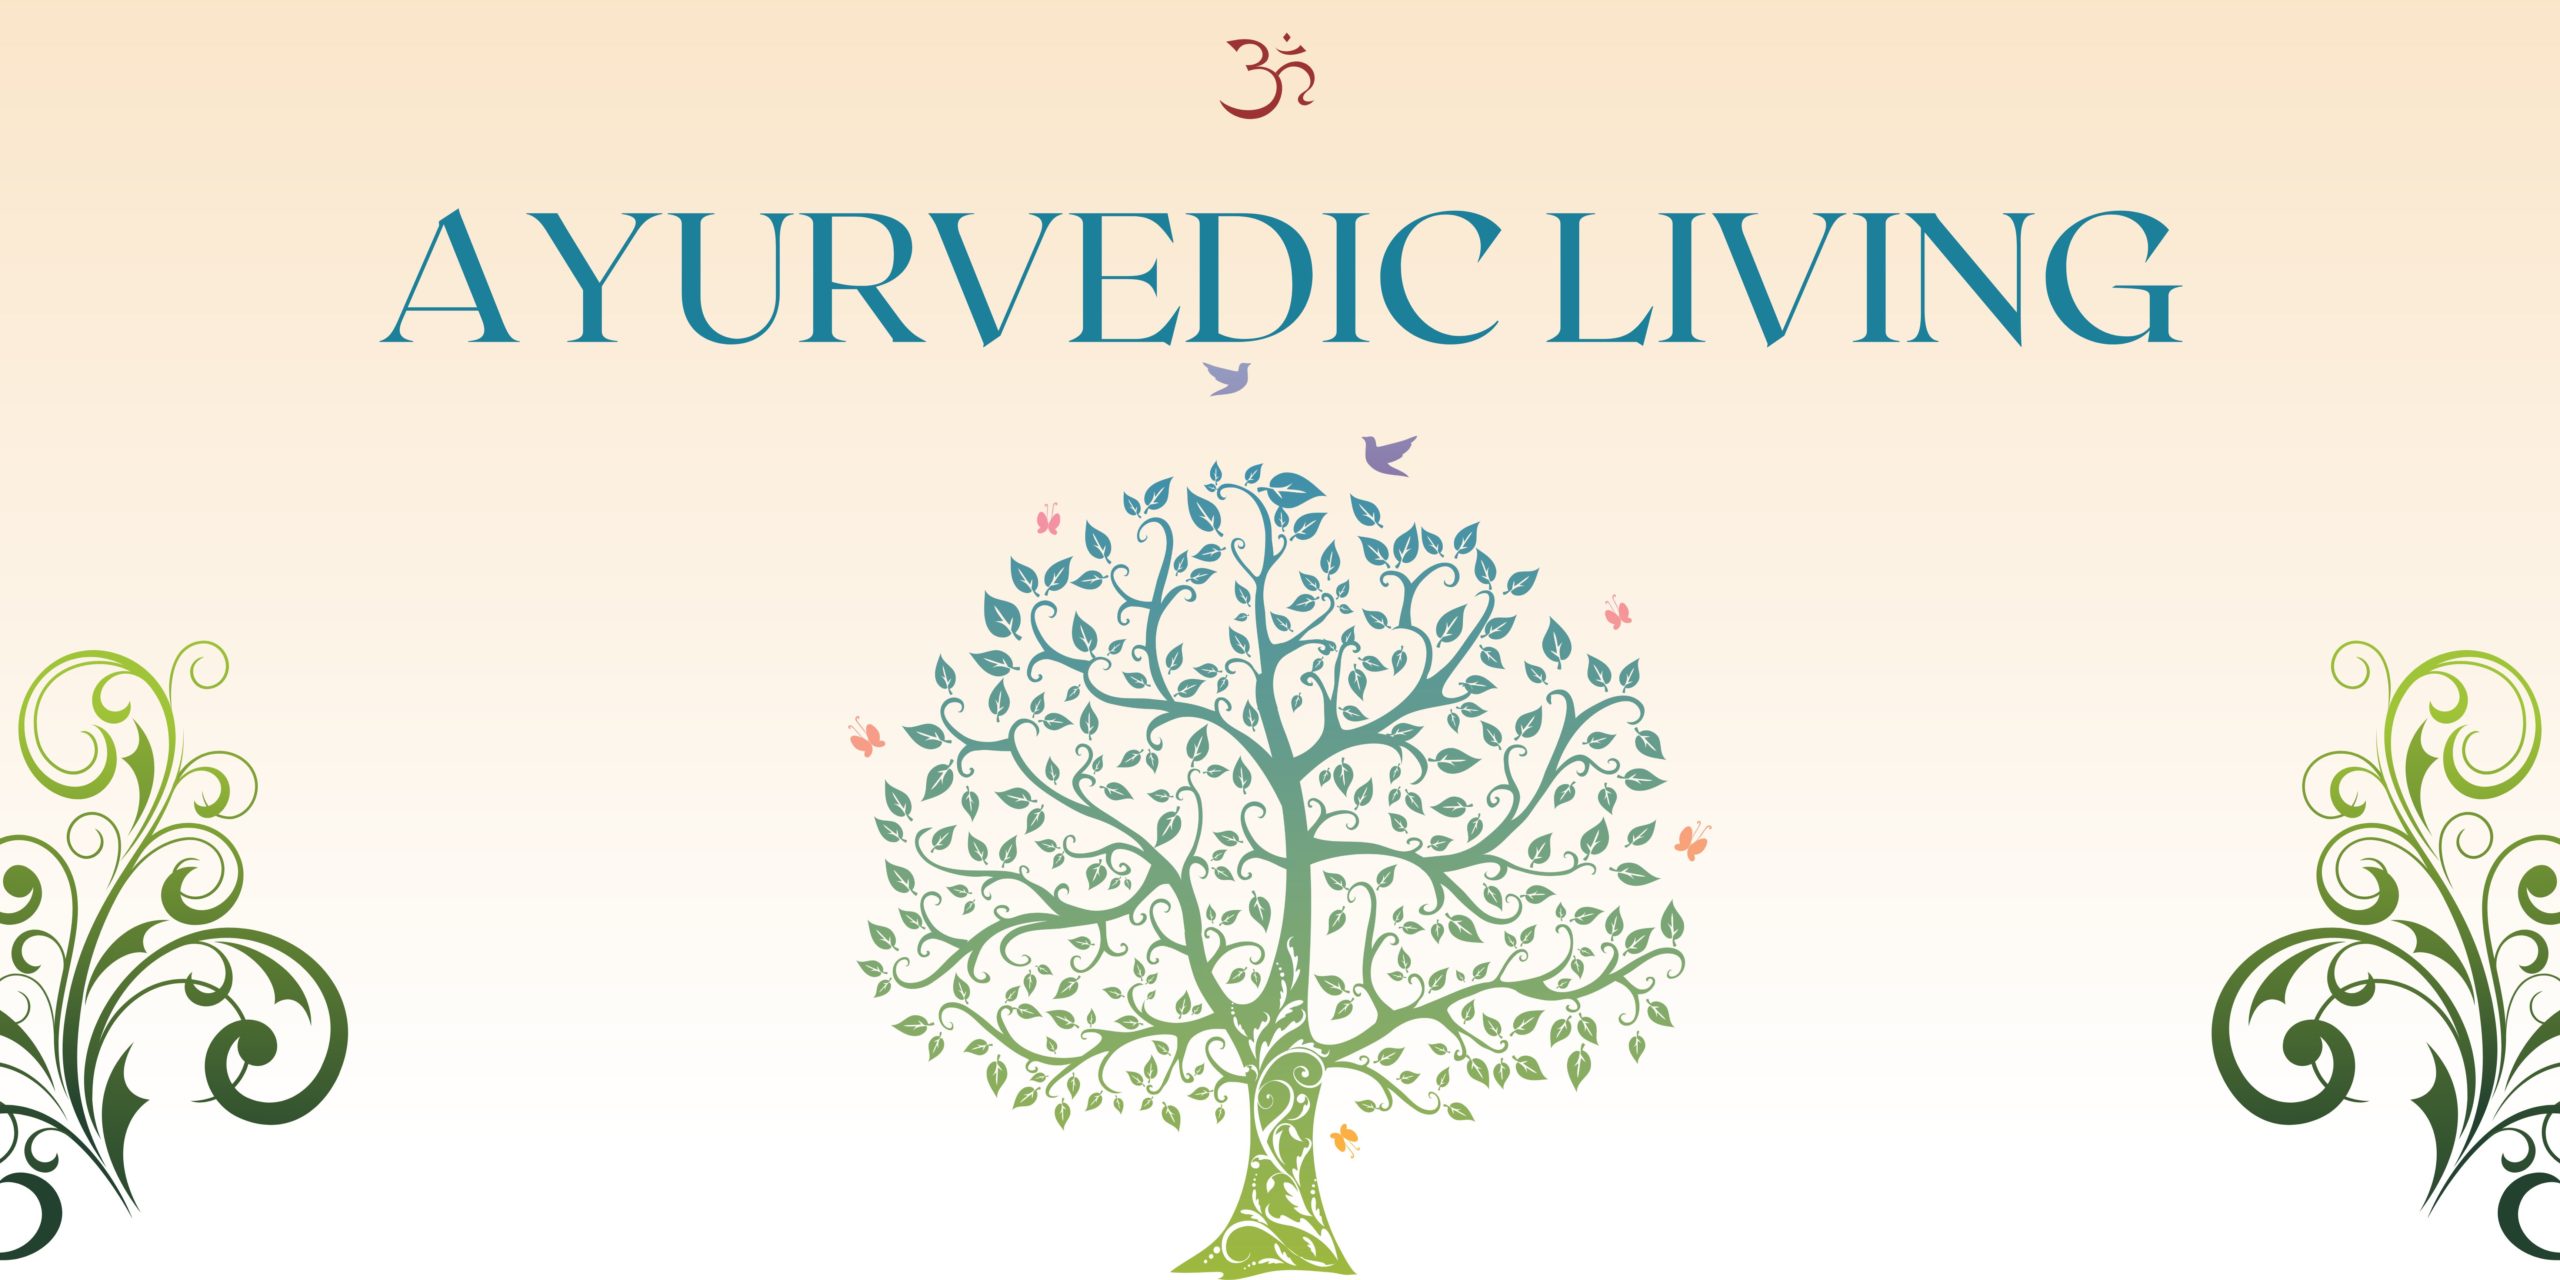 Ayurvedic Living - Yoga